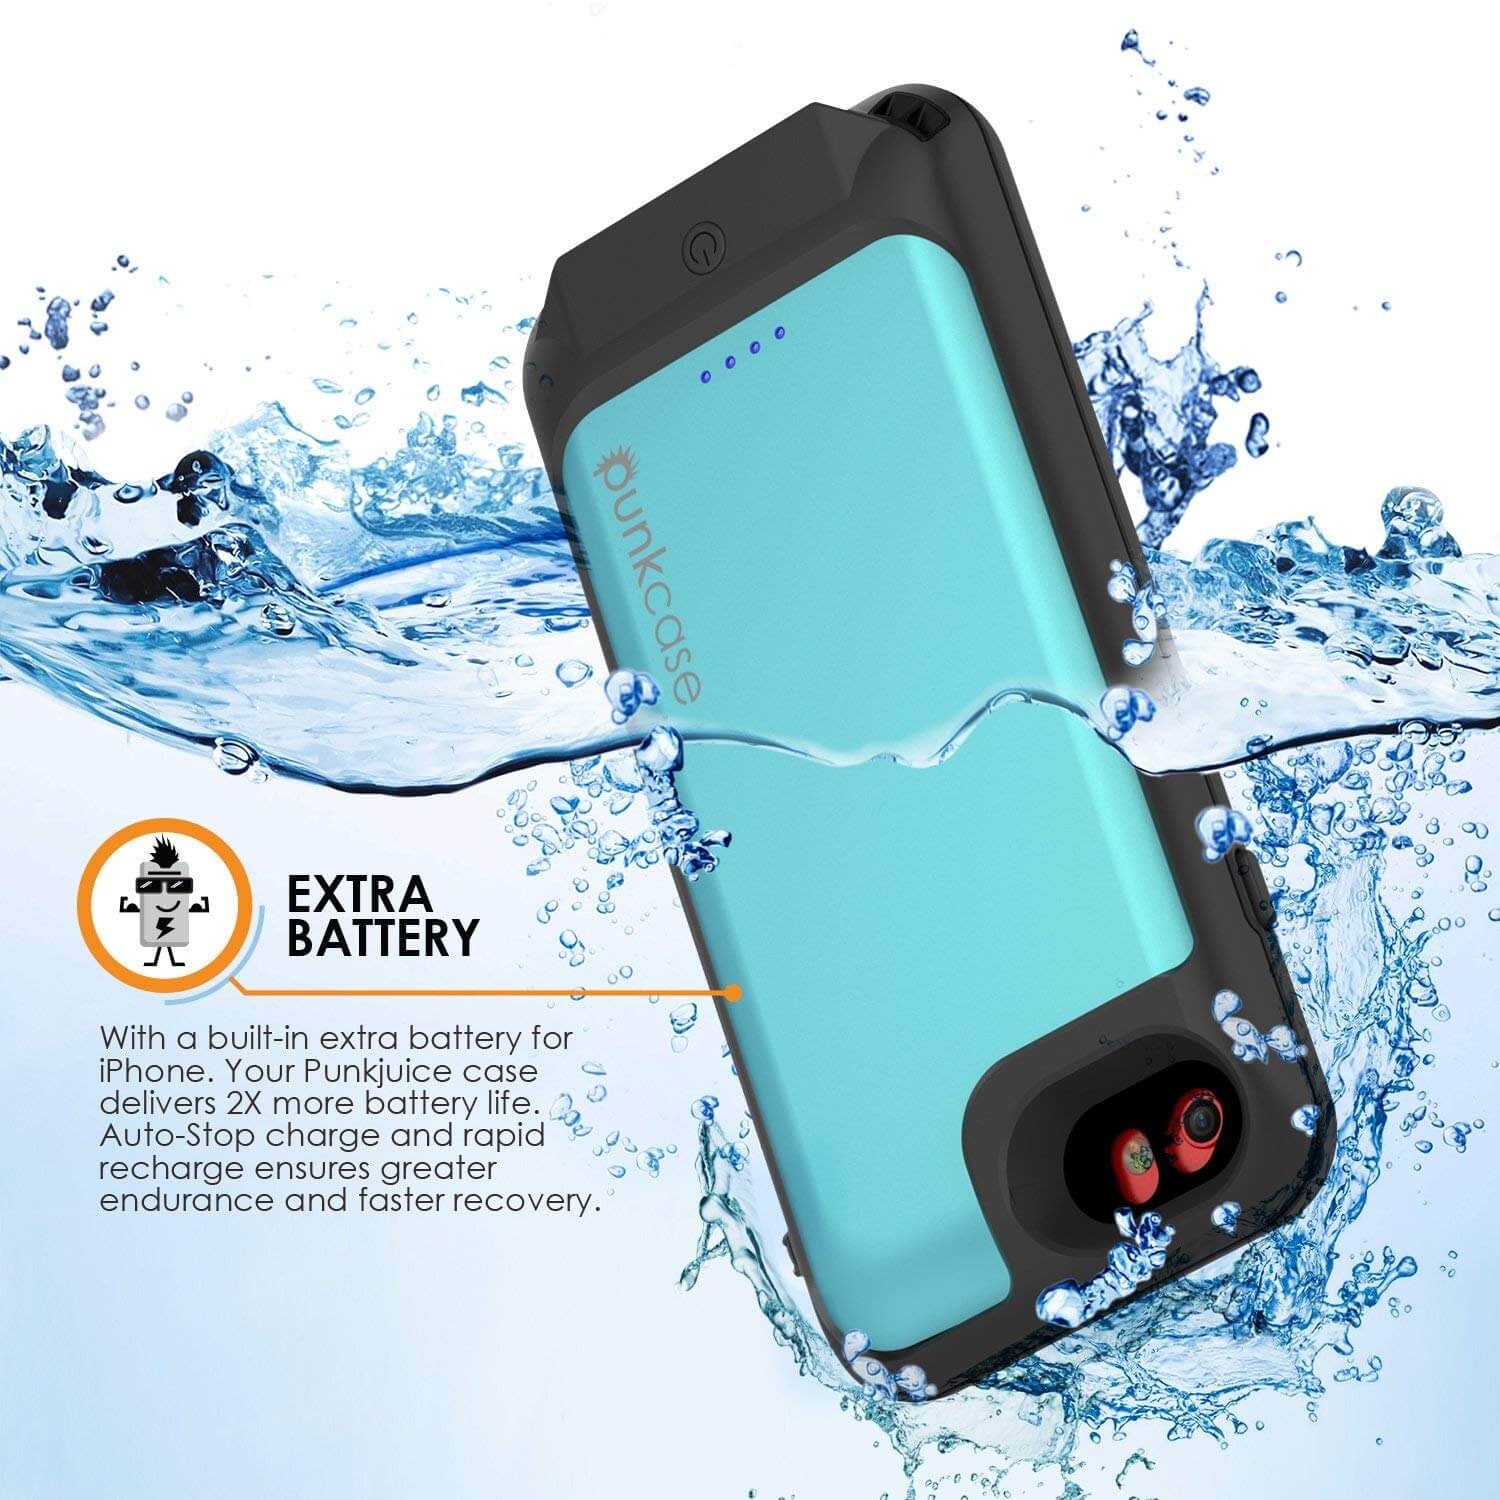 PunkJuice iPhone 7 Battery Case Teal - Waterproof Slim Power Juice Bank with 2750mAh